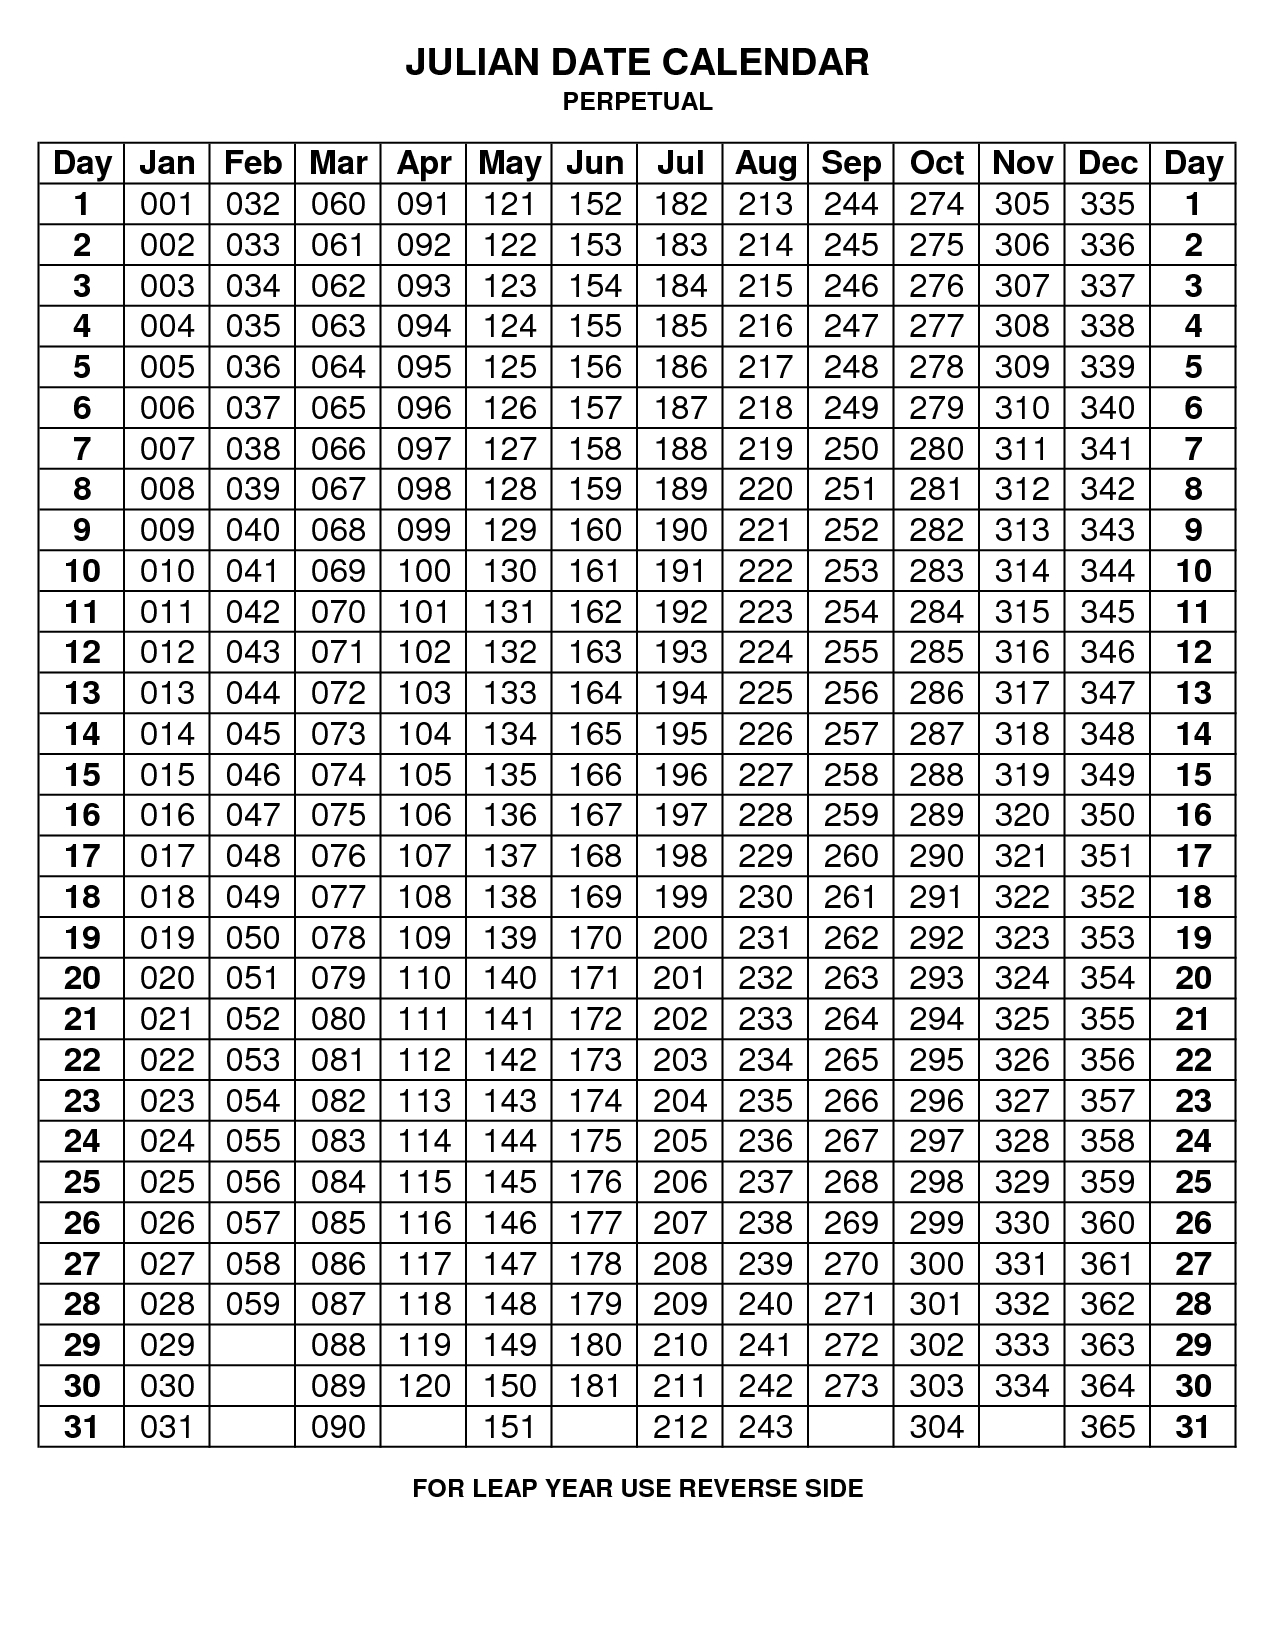 Julian Code - Non-Leap Year | Printable Calendar Template pertaining to Julian Date For Leap Year